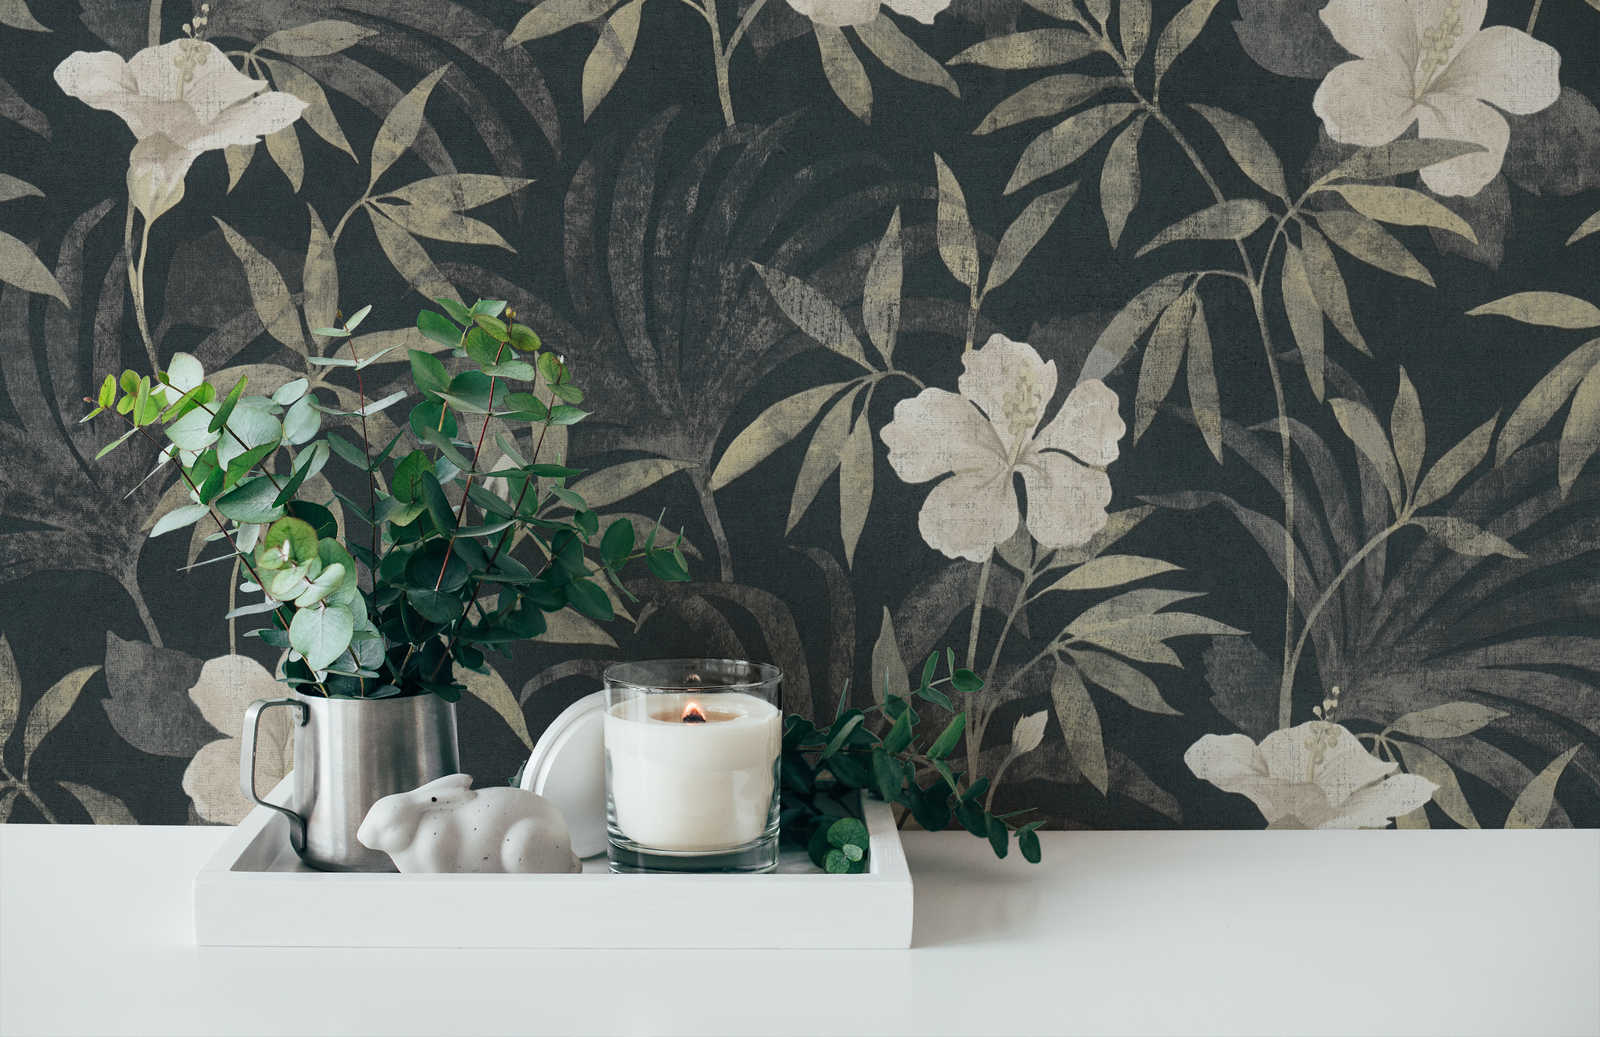             Jungle wallpaper retro pattern with tropical design - brown, grey, black
        